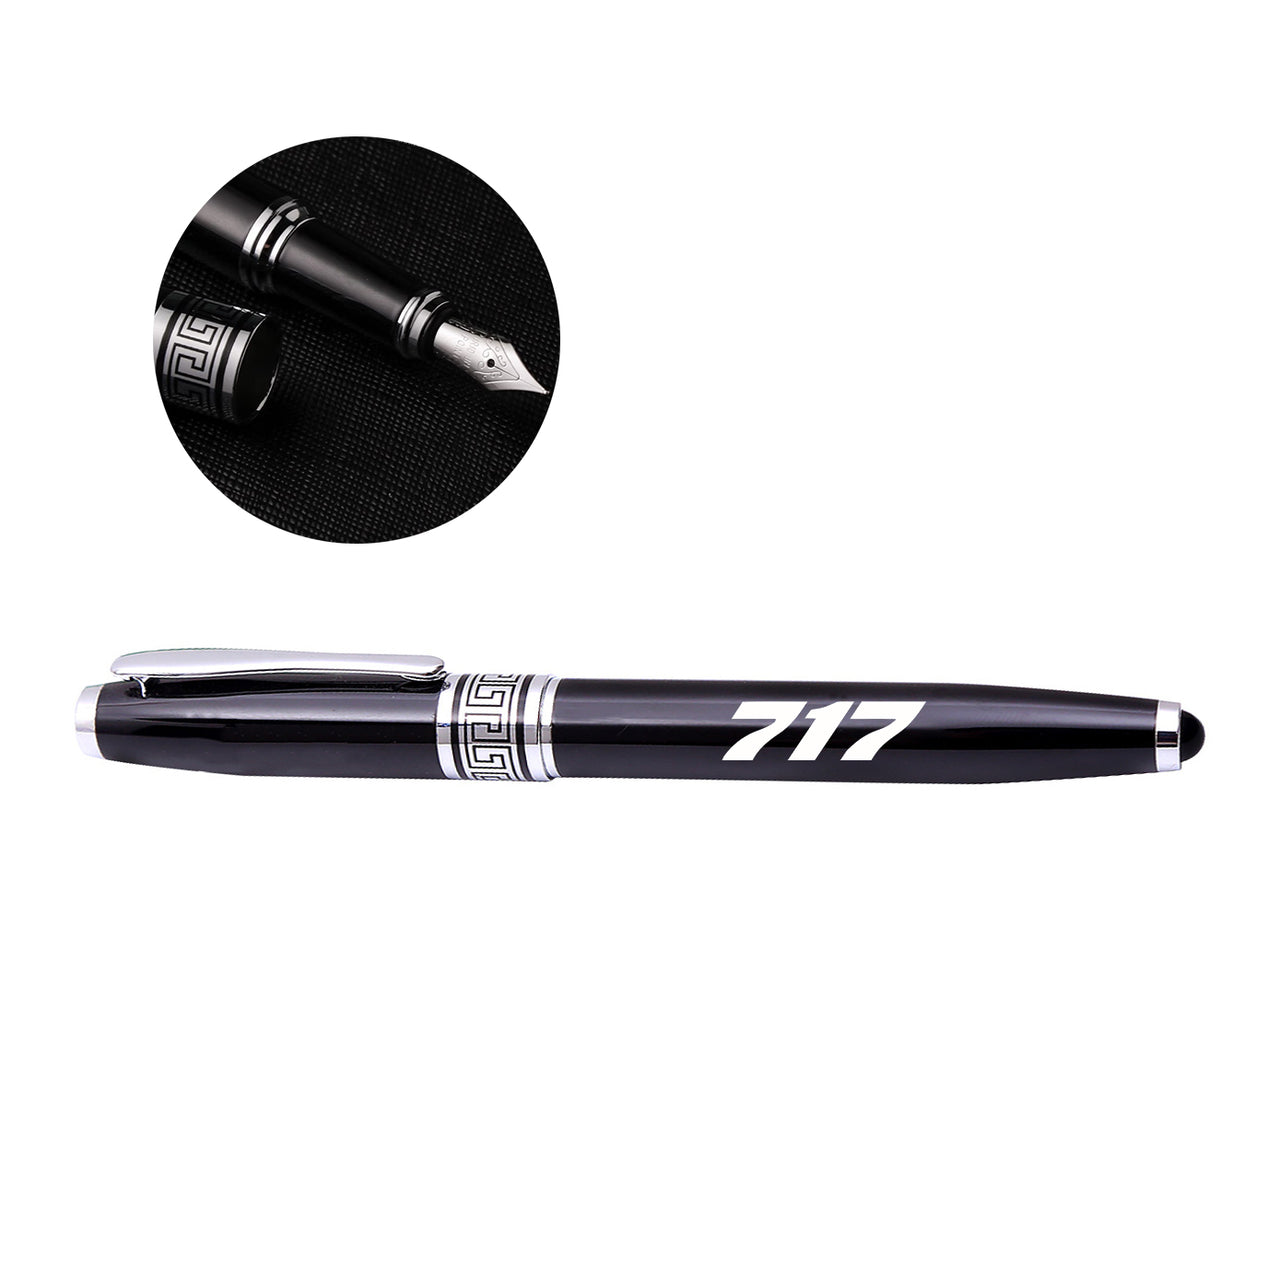 717 Flat Text Designed Pens